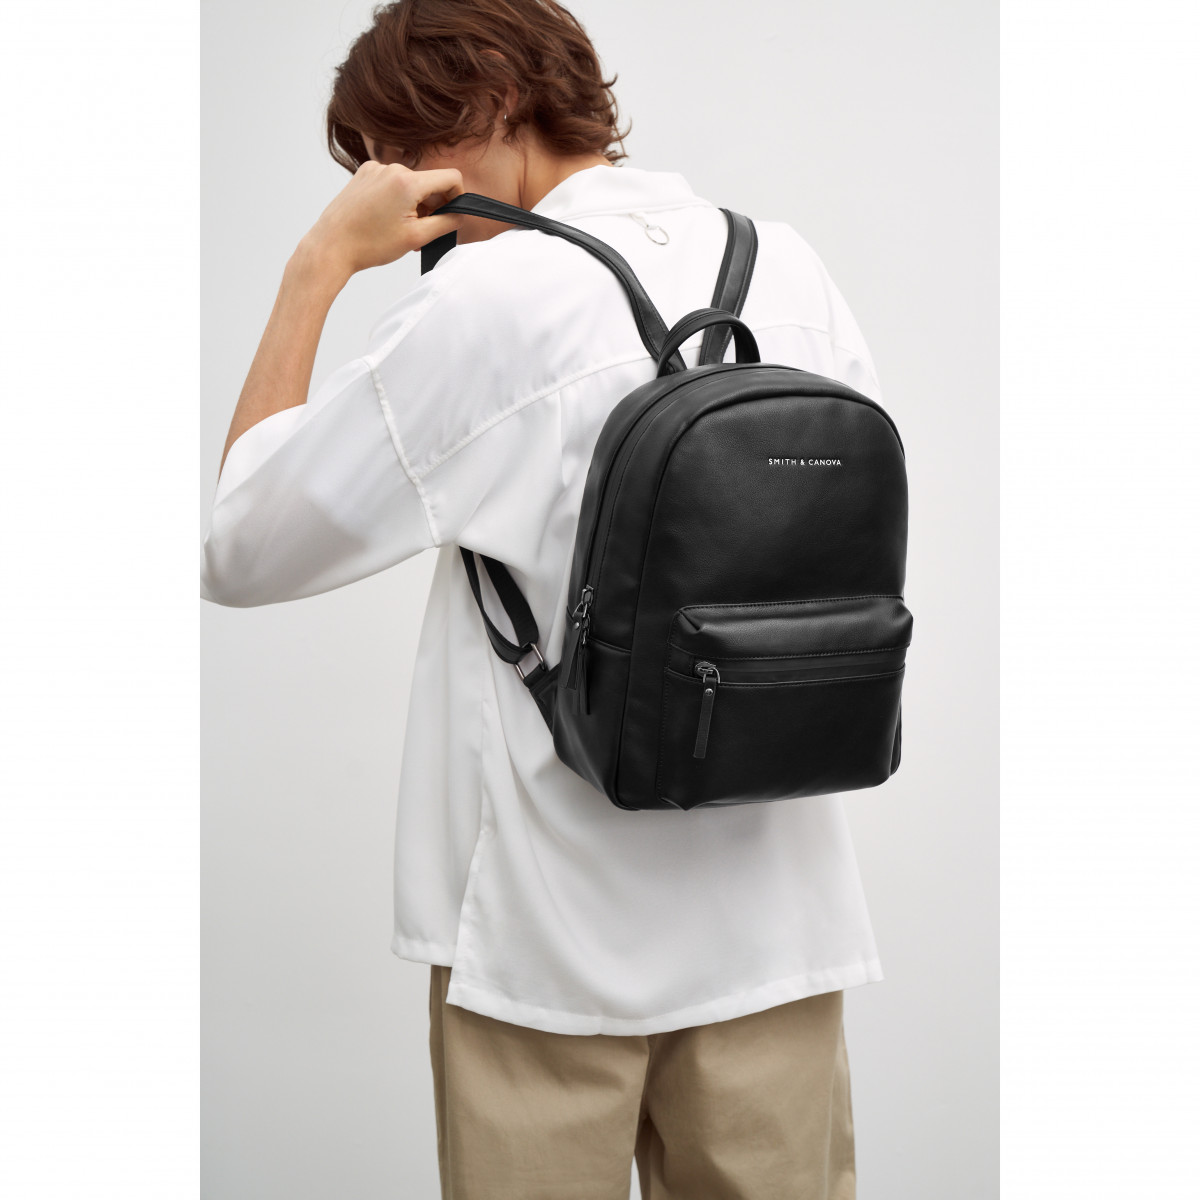 Smith & Canova Backpack 